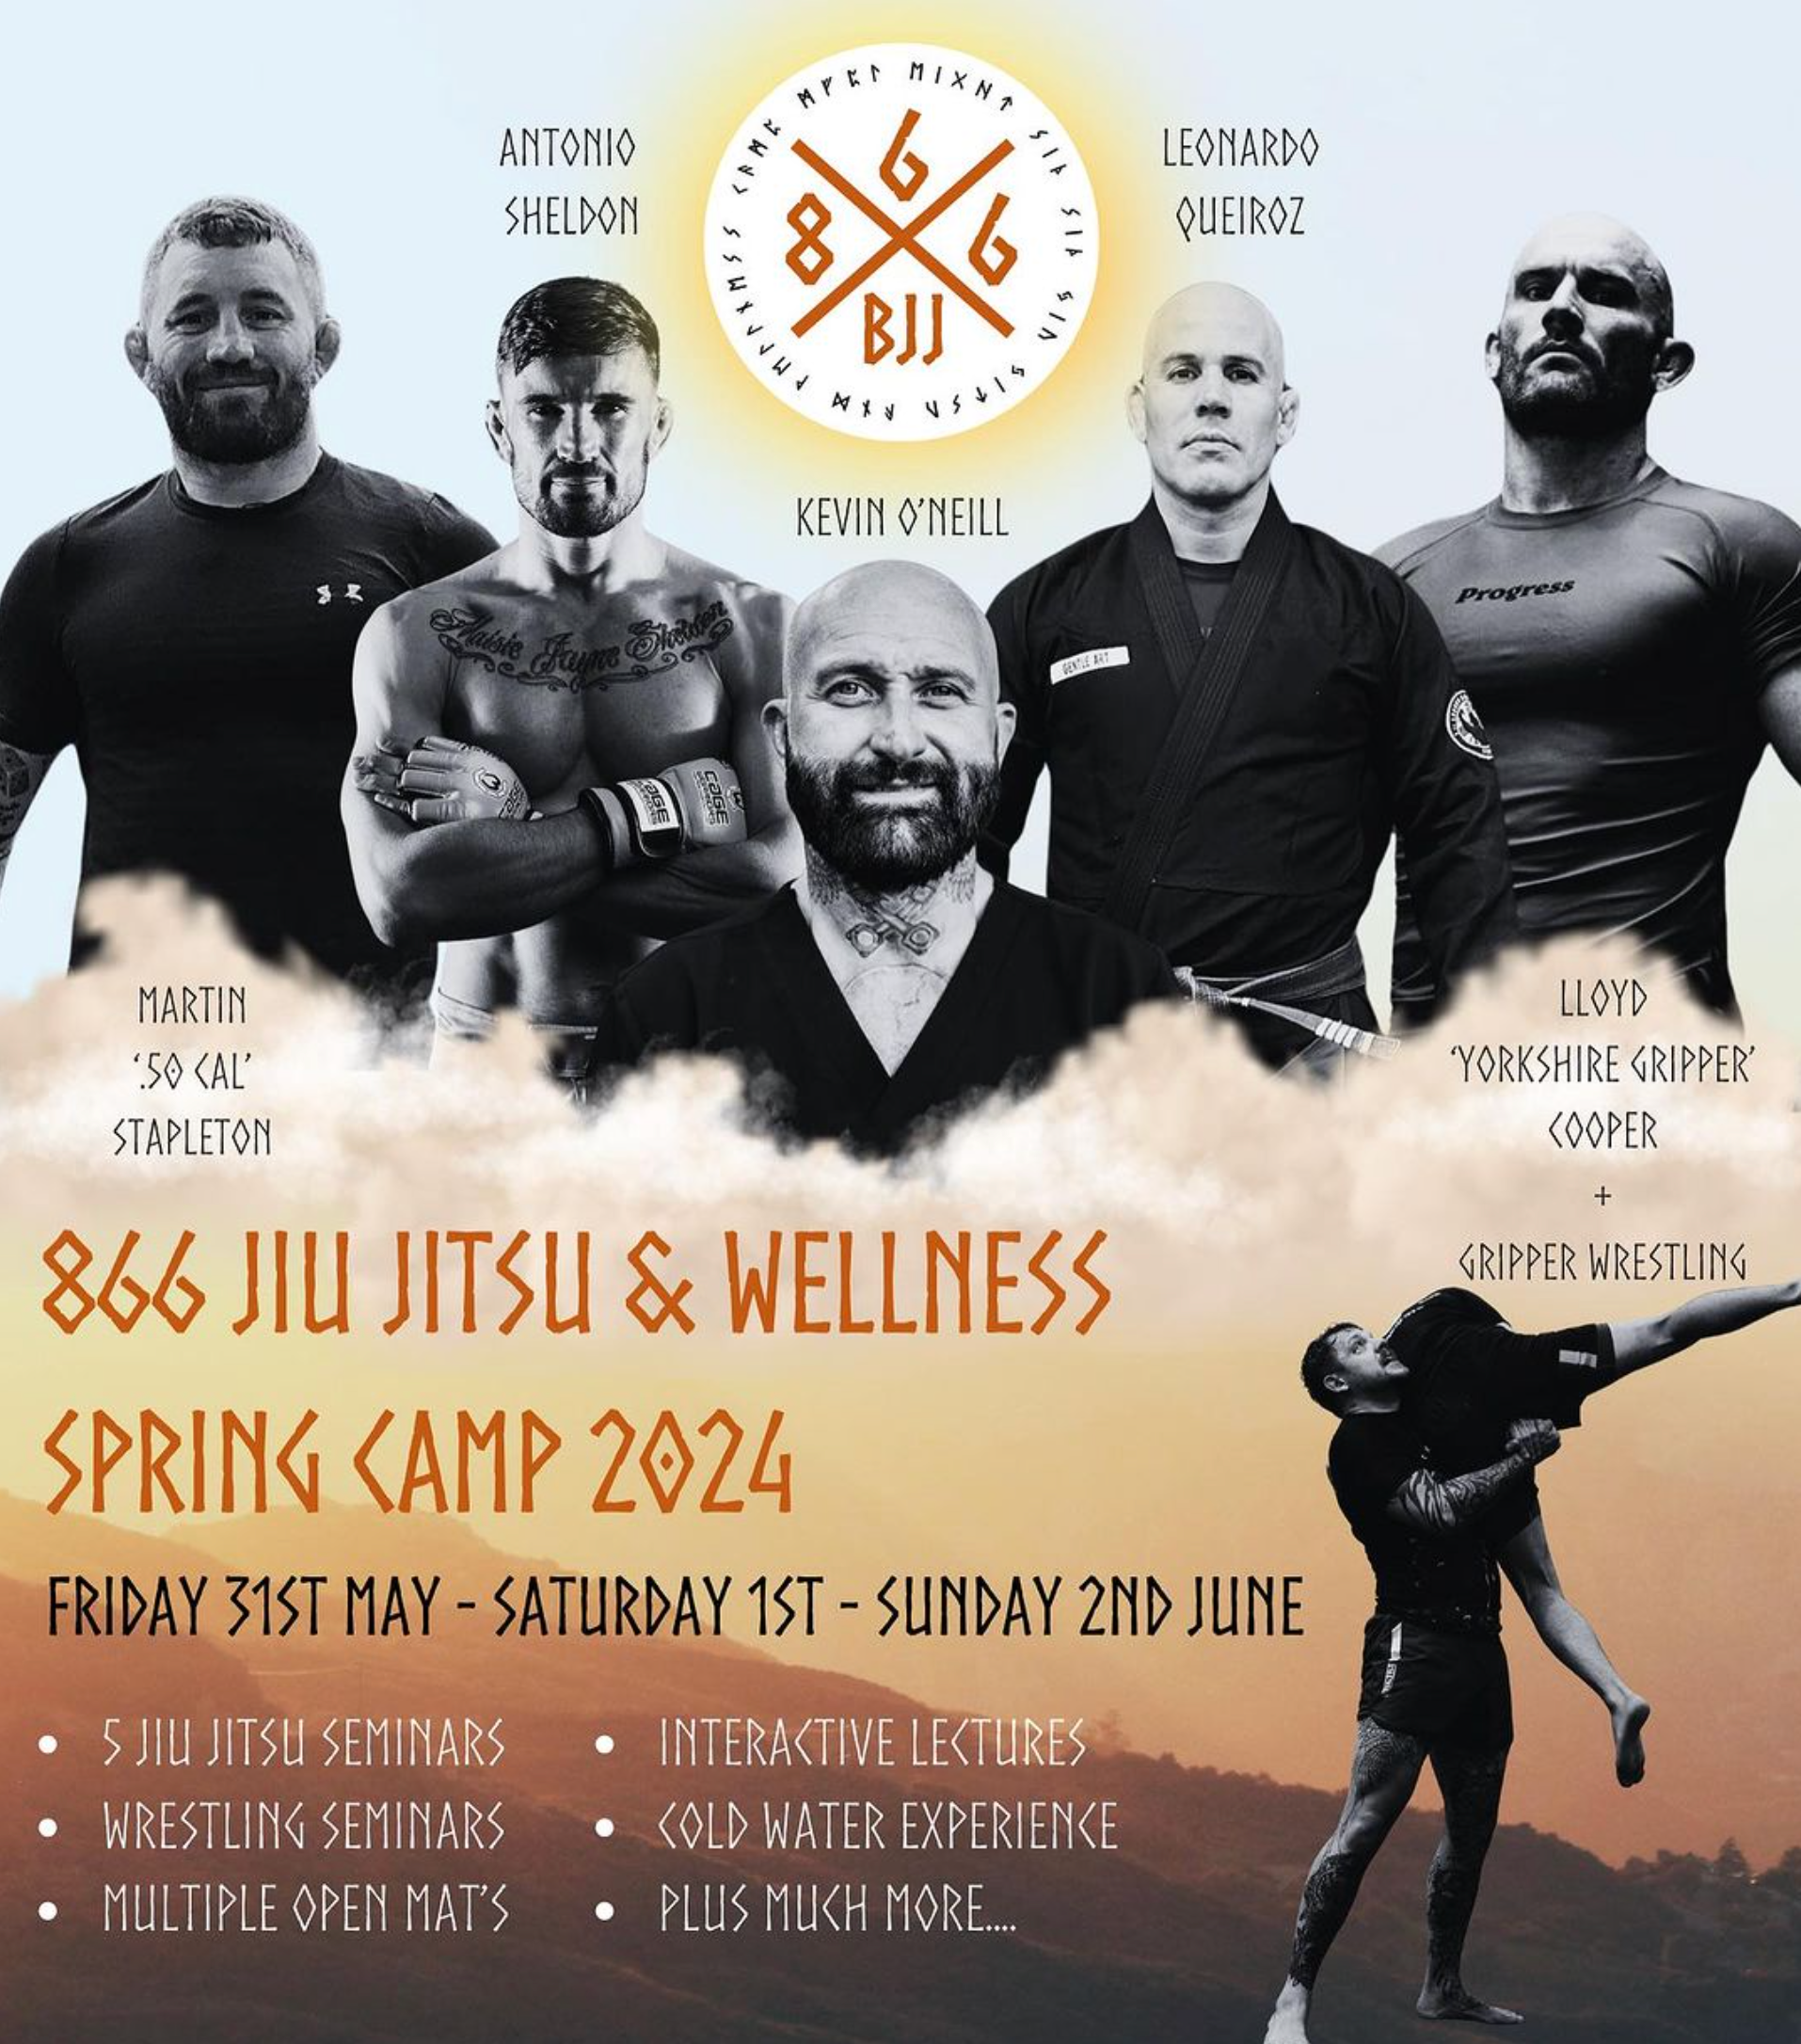 a poster for a jiu jitsu and wellness spring camp .